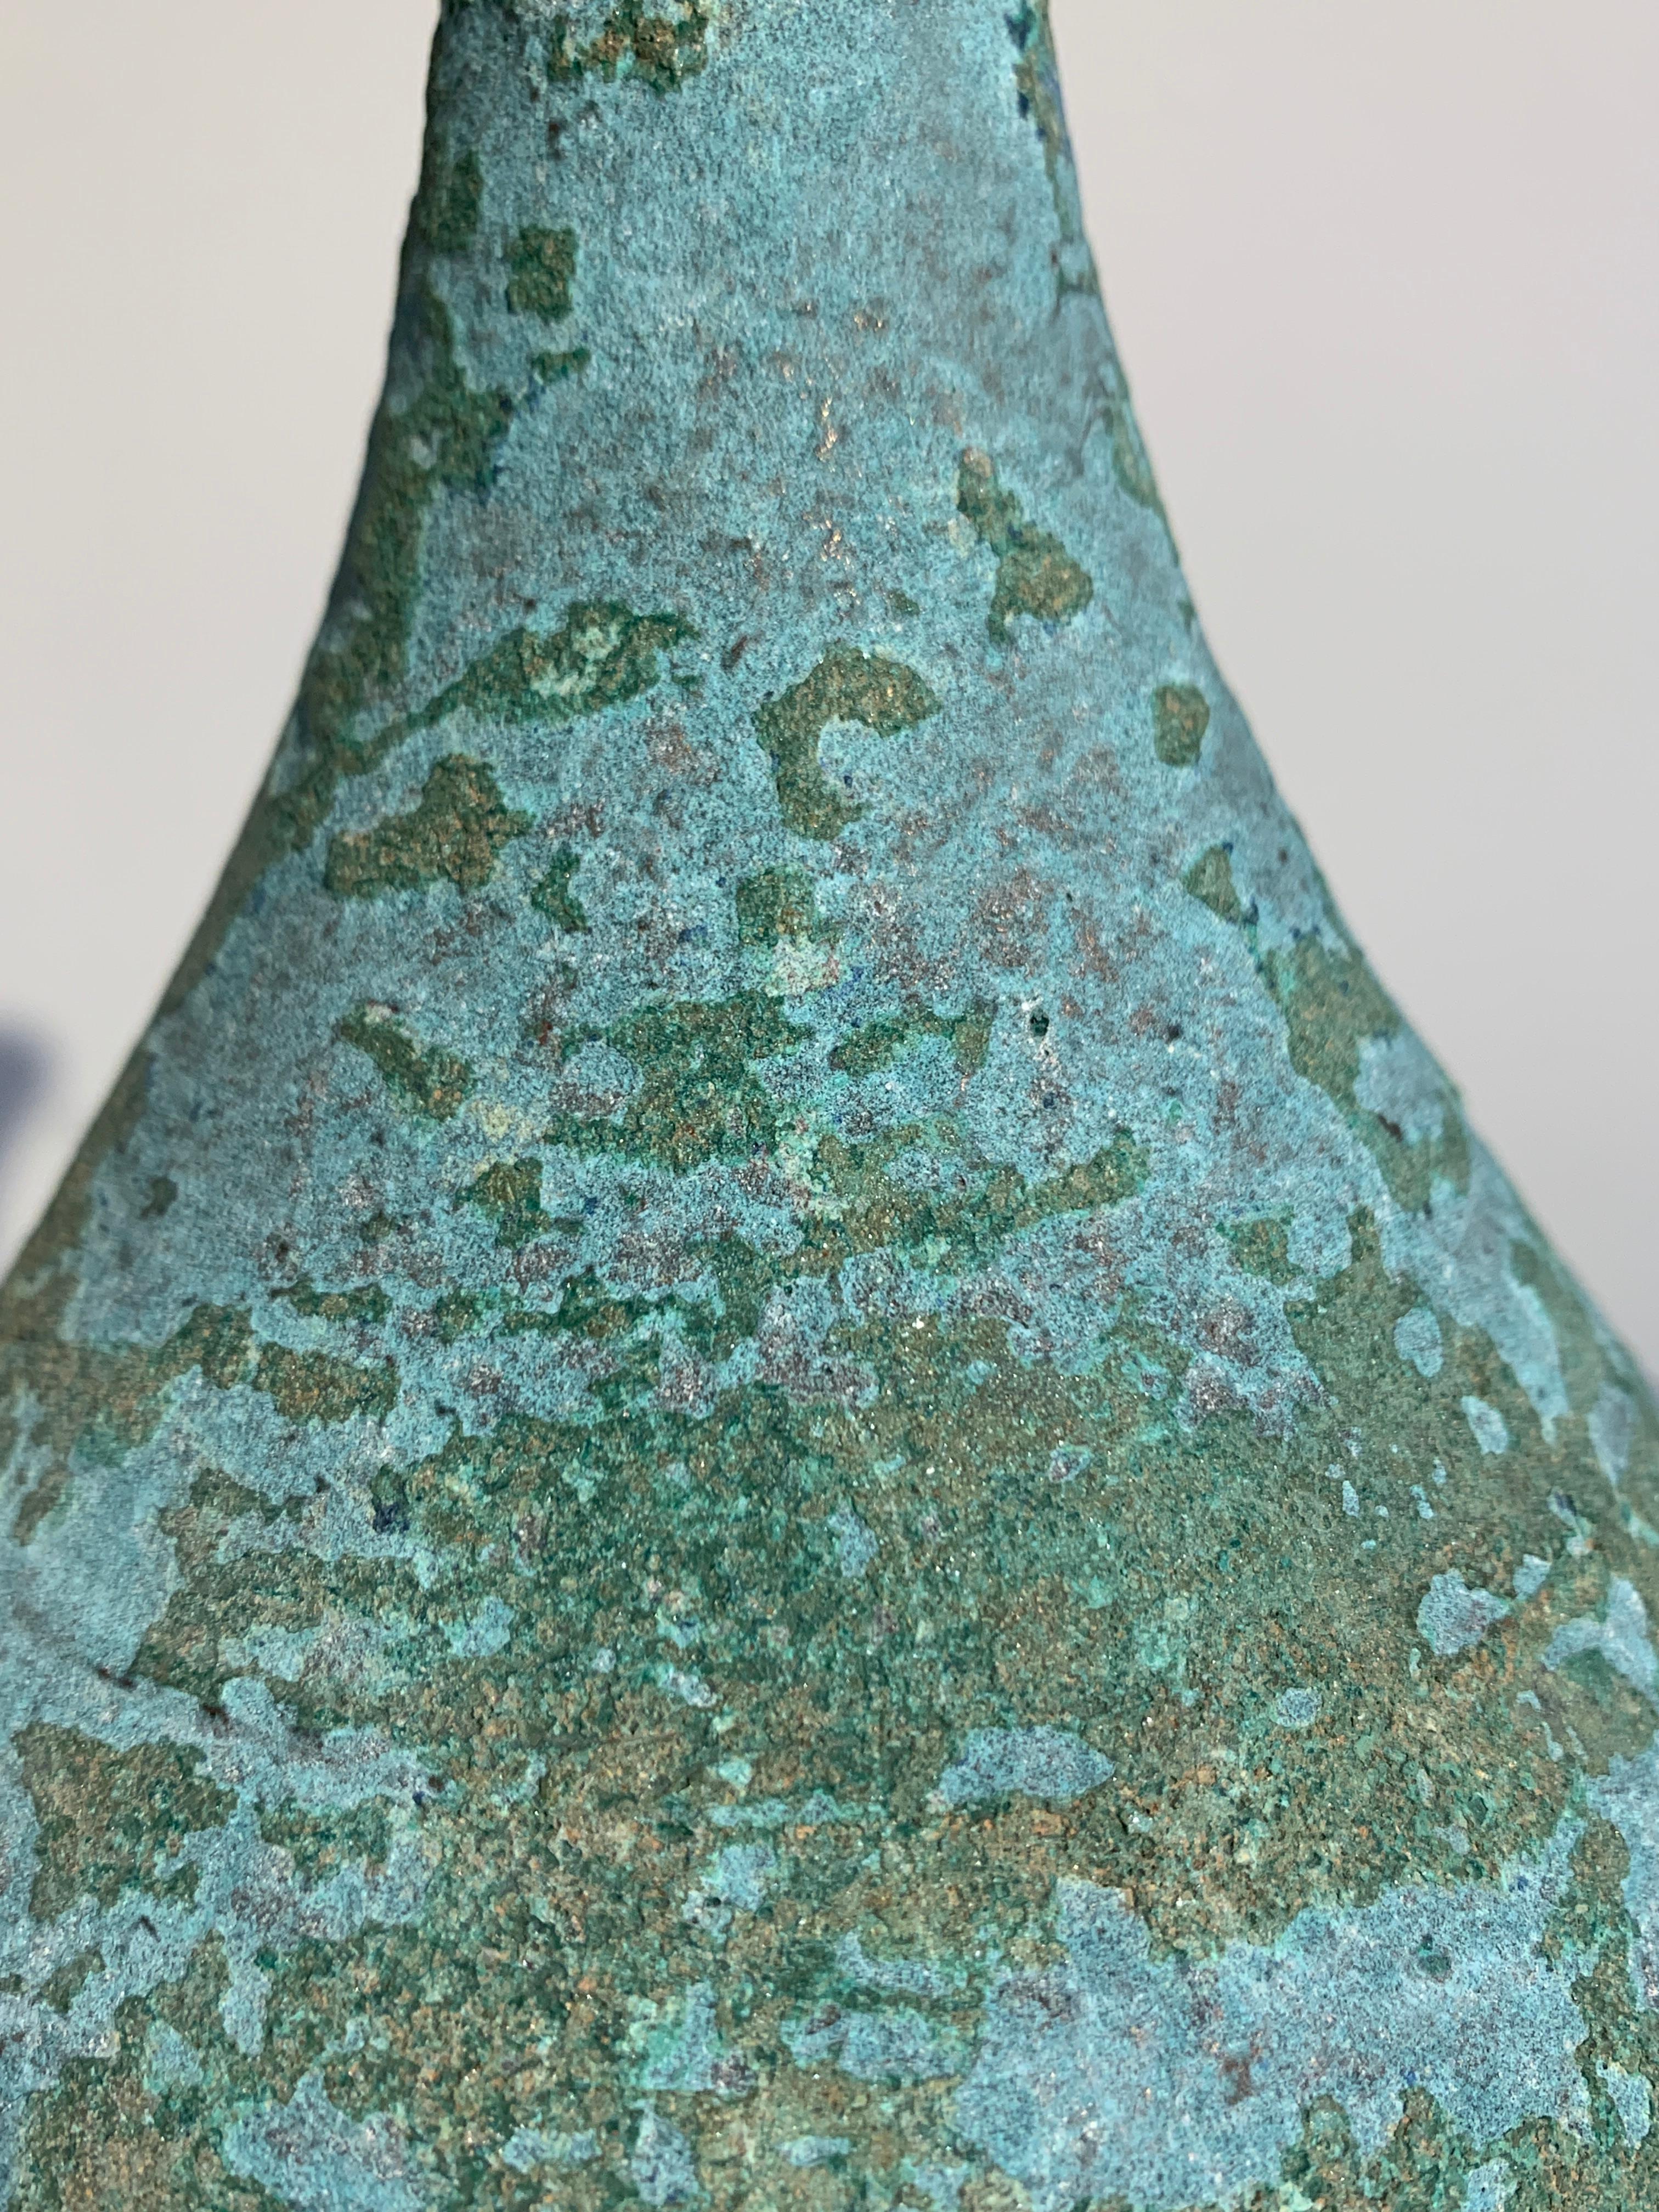 Korean Bronze Vase with Blue Green Patina, Goryeo Dynasty, 13th Century 1